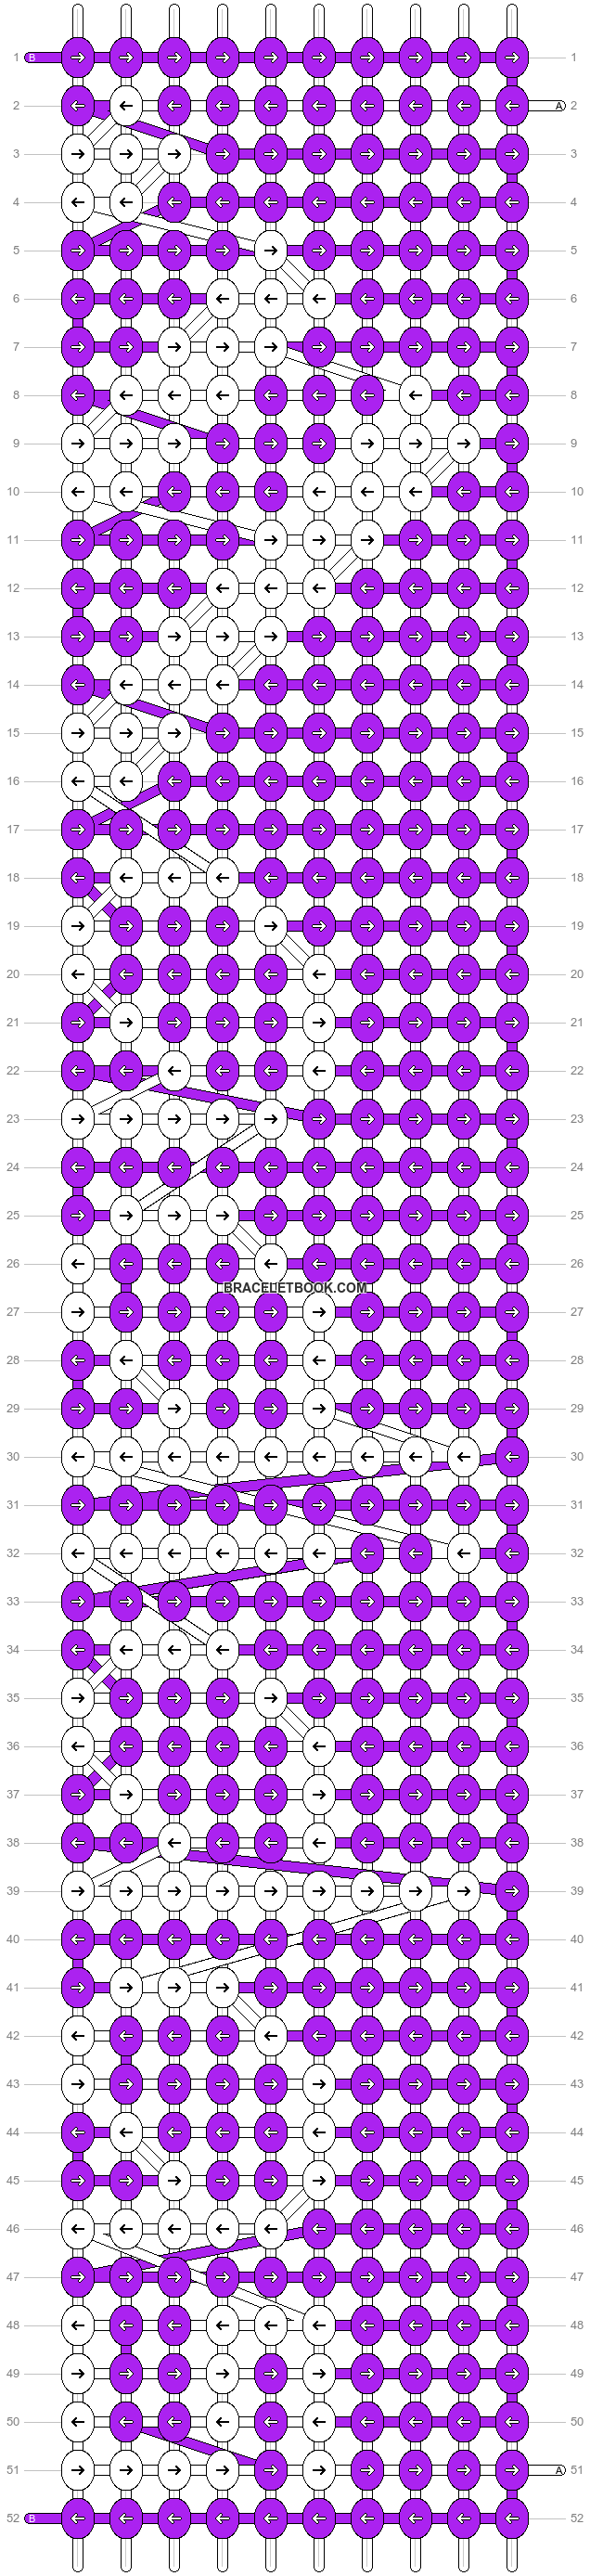 Alpha pattern #57019 variation #101189 pattern